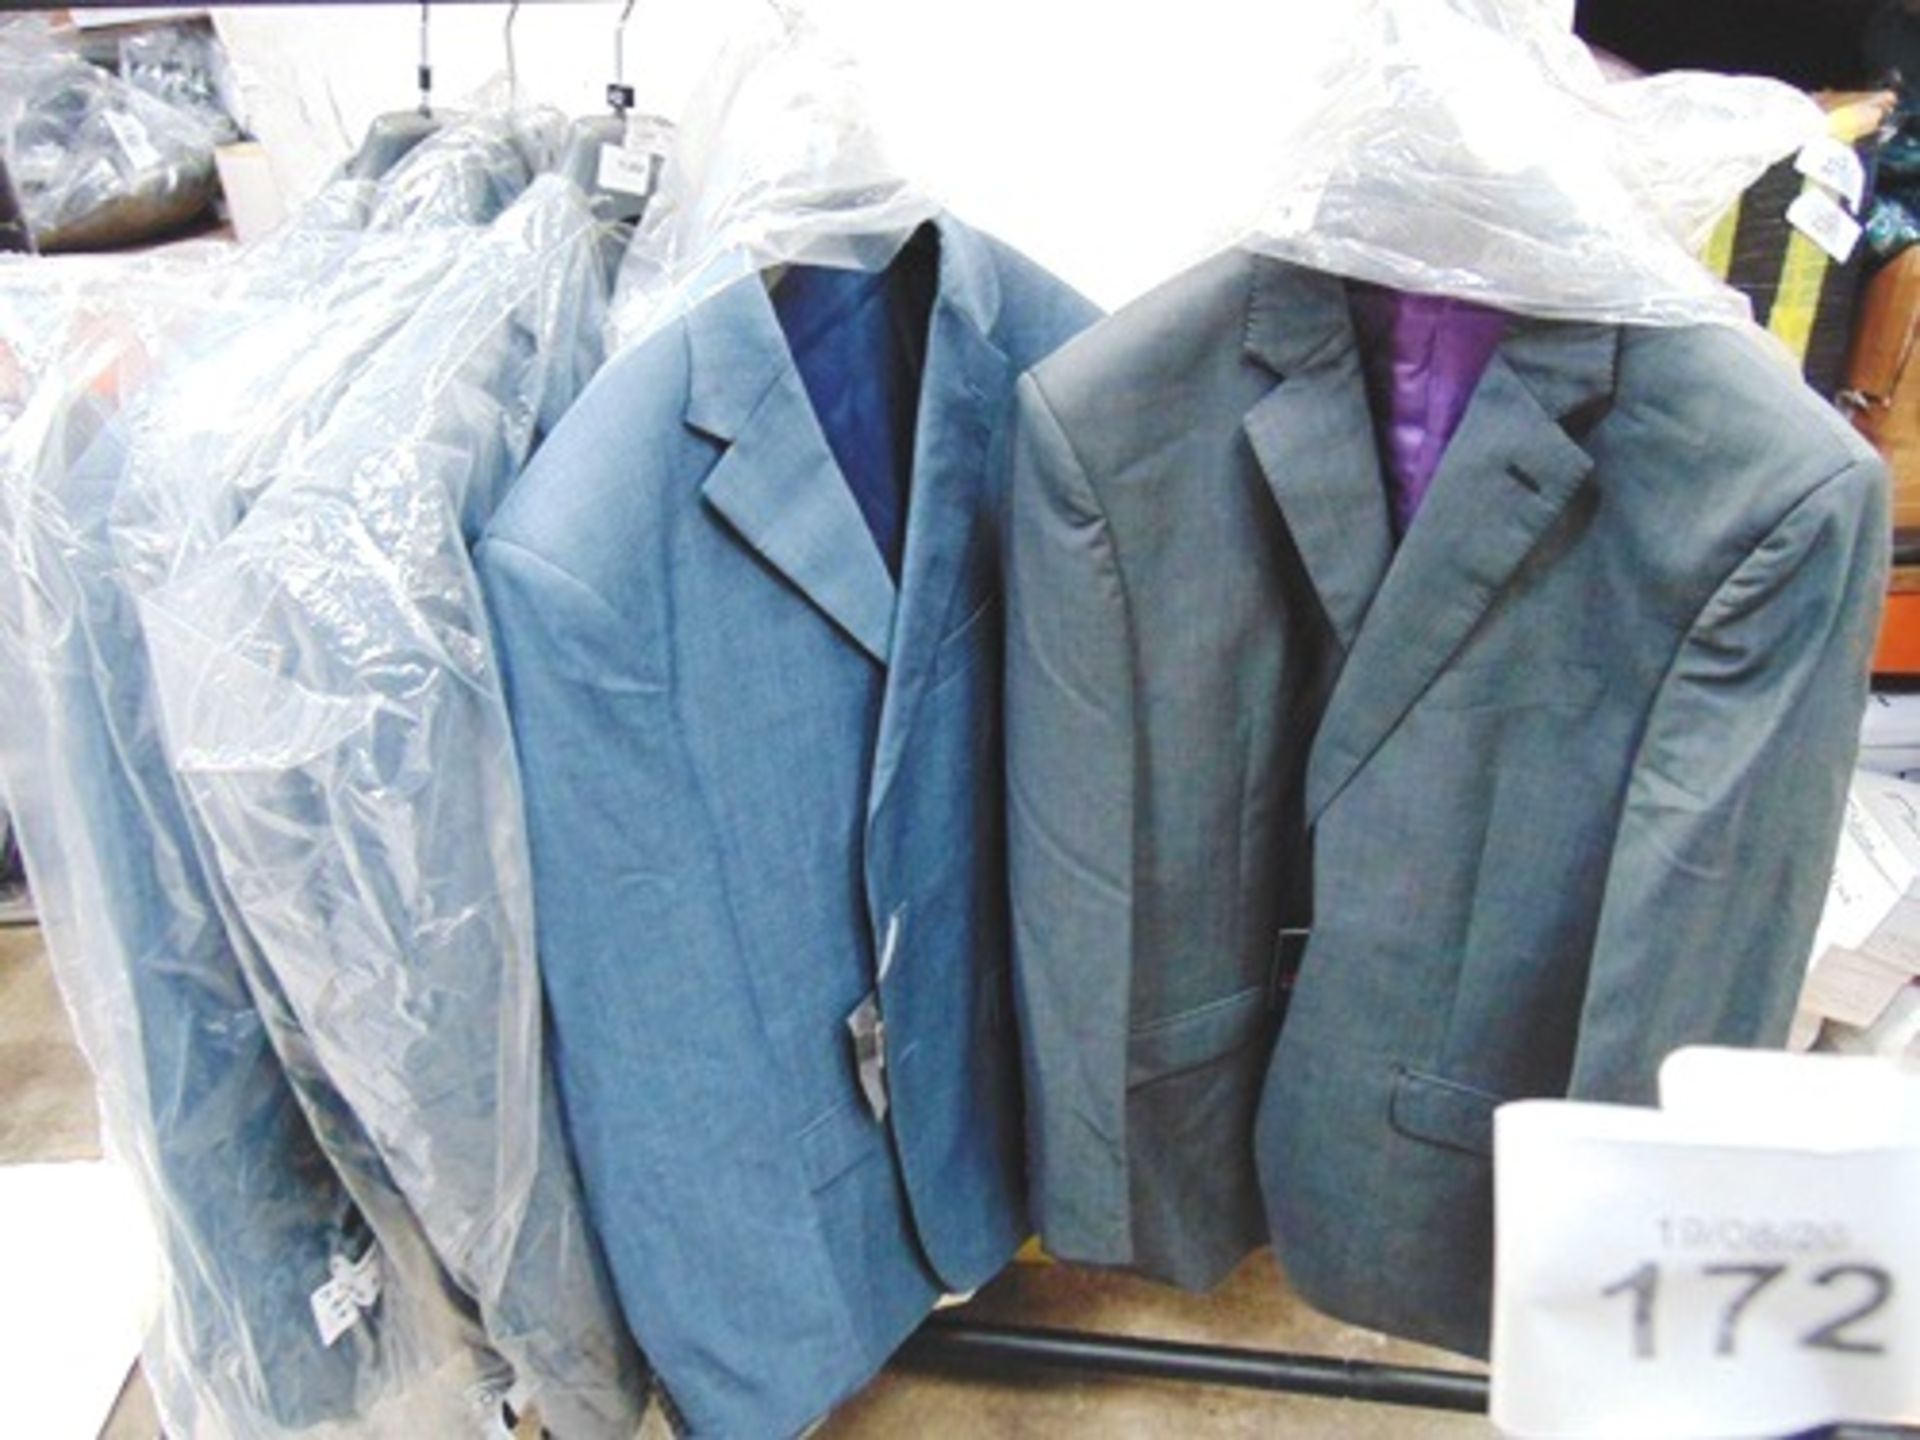 5 x John Lewis mohair suit jackets, 4 x blue and 1 x Mayfair grey, size 38 - 44- New (ESB10B)